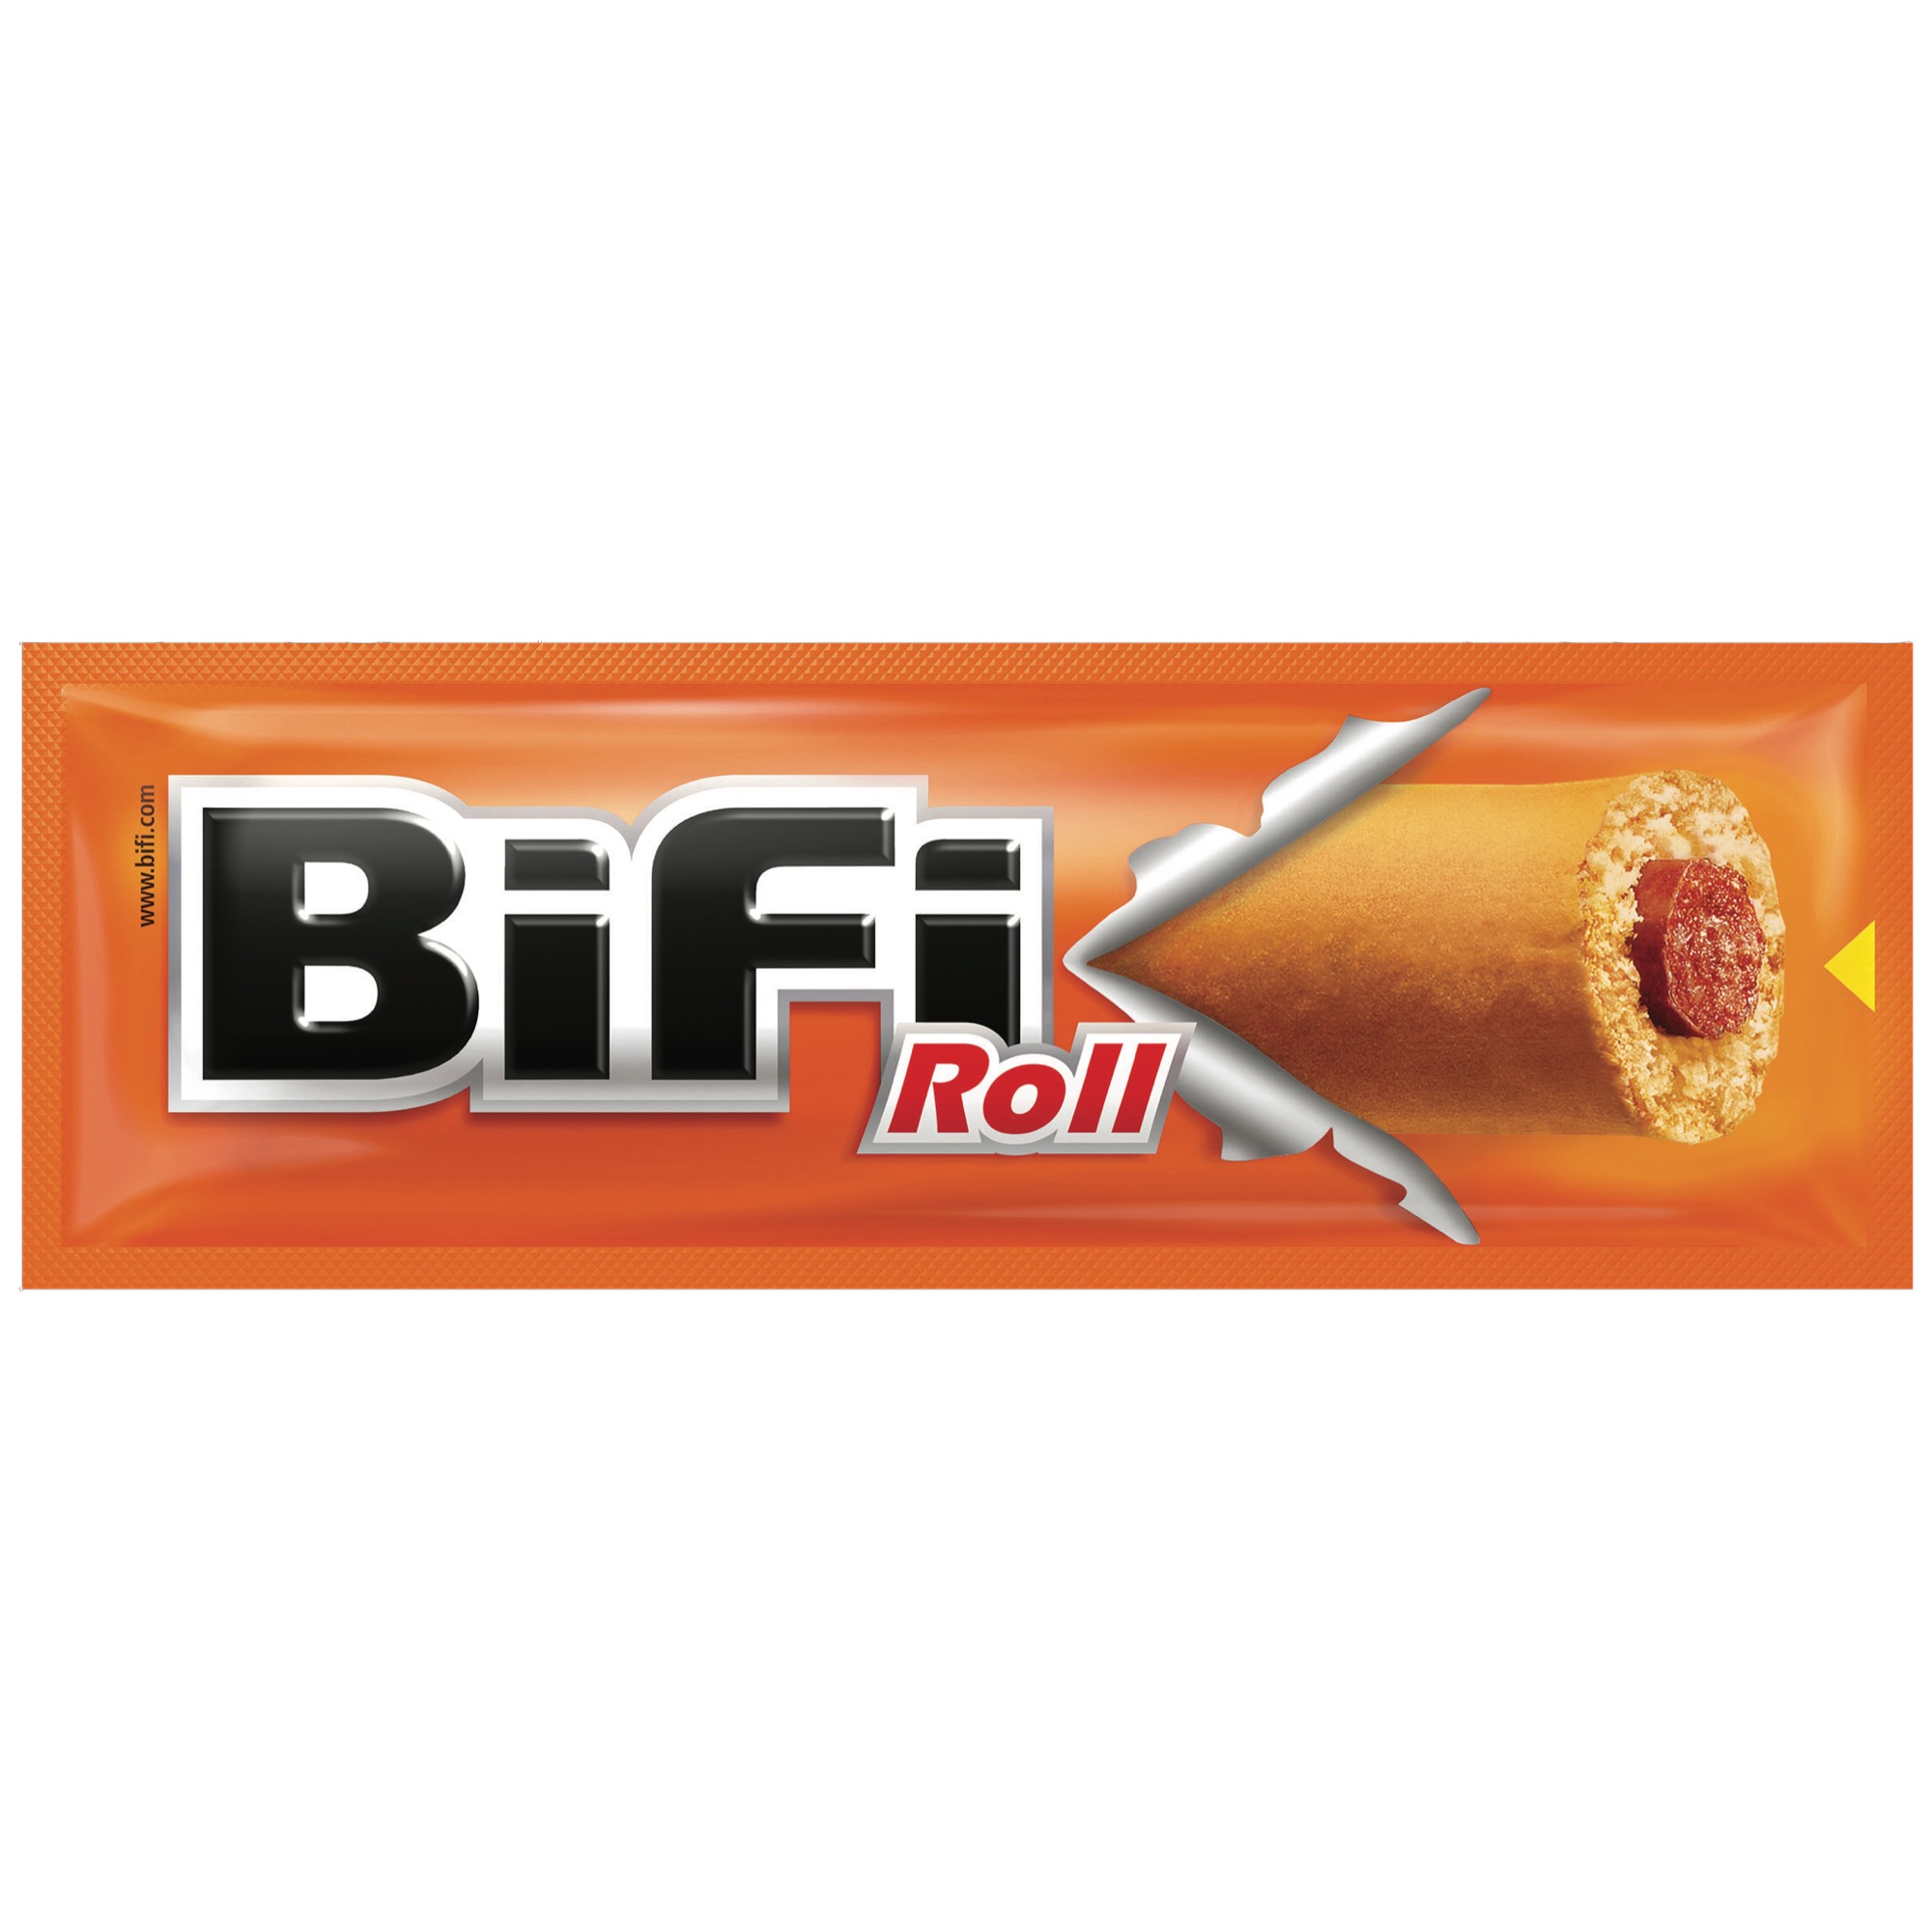 Bifi Roll 45g